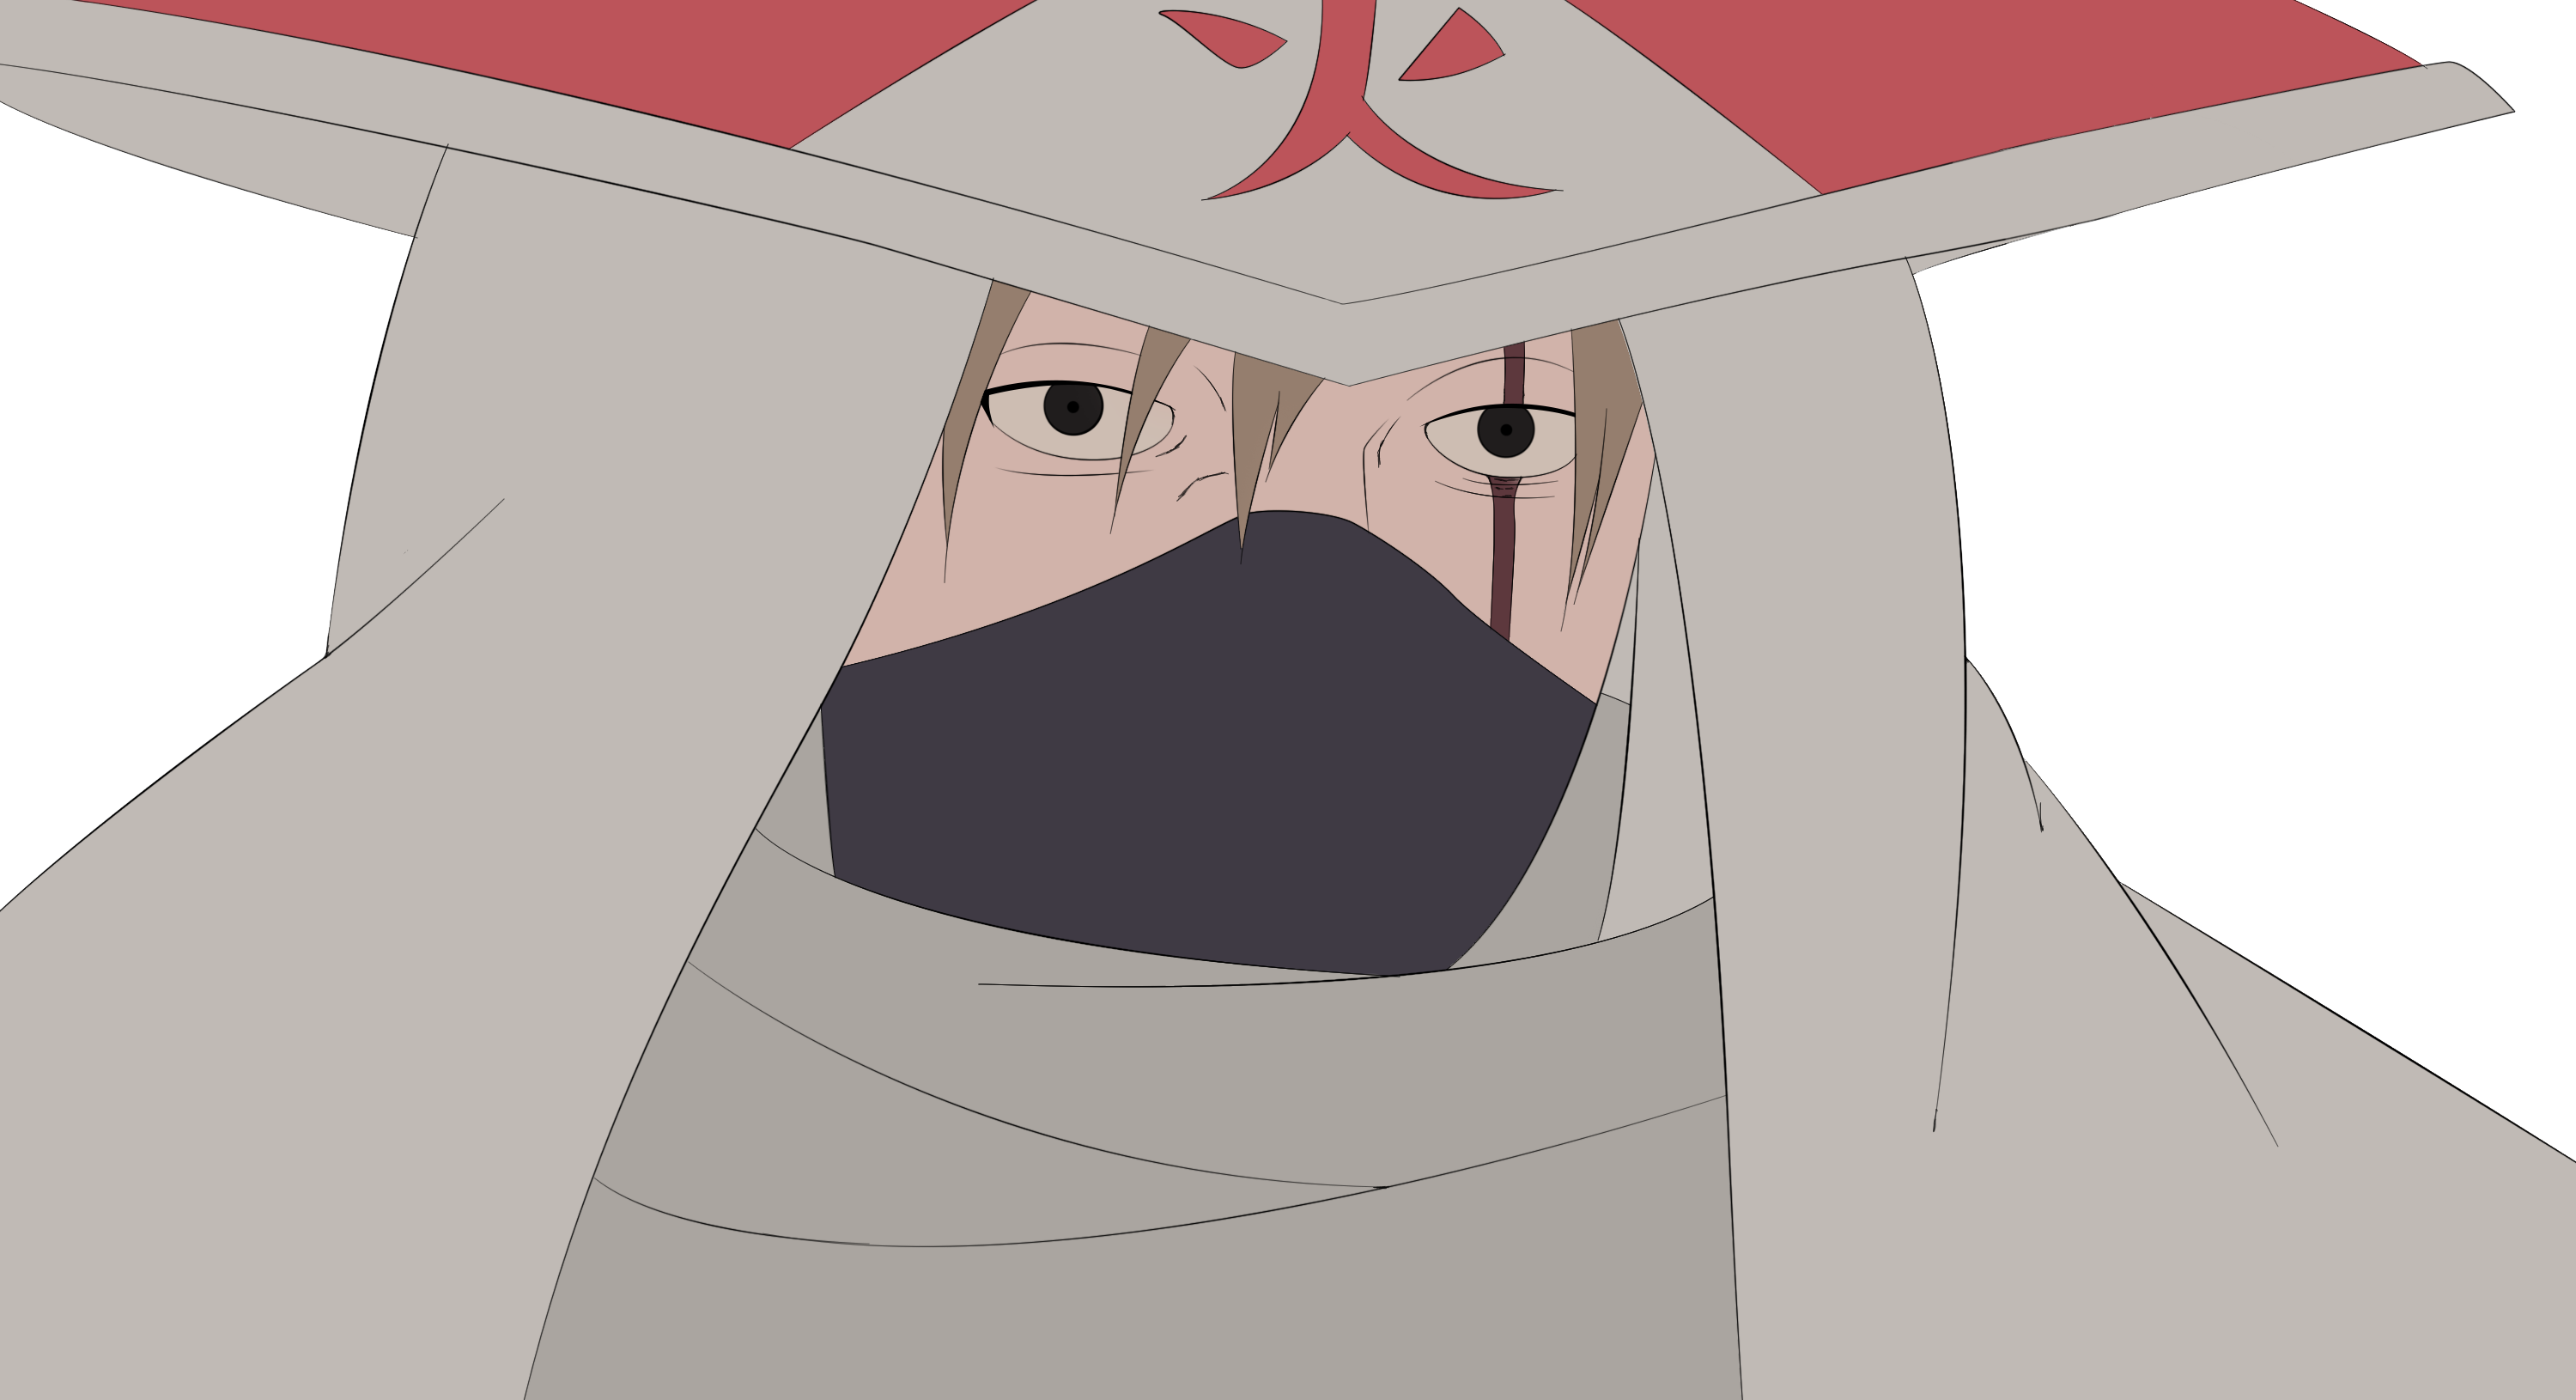 Naruto e Kakashi - Colorido by ADMUlielson on DeviantArt